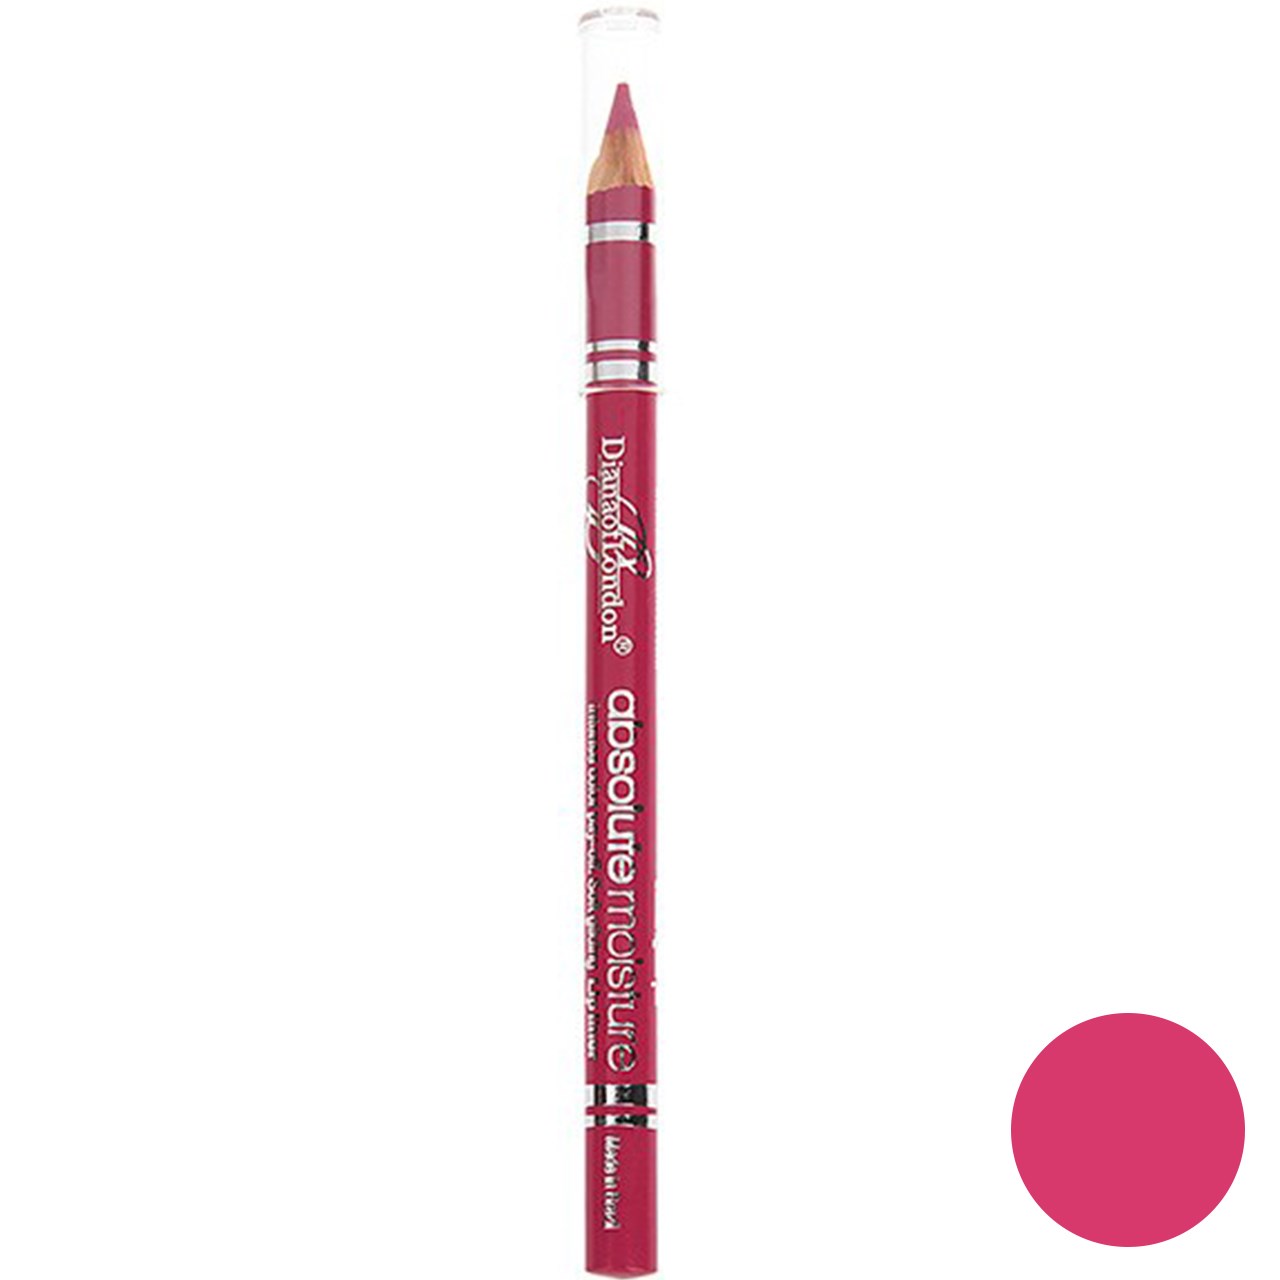 مداد لب دایانا آف لاندن سری Absolute Moisture مدل Pink Peony شماره 14